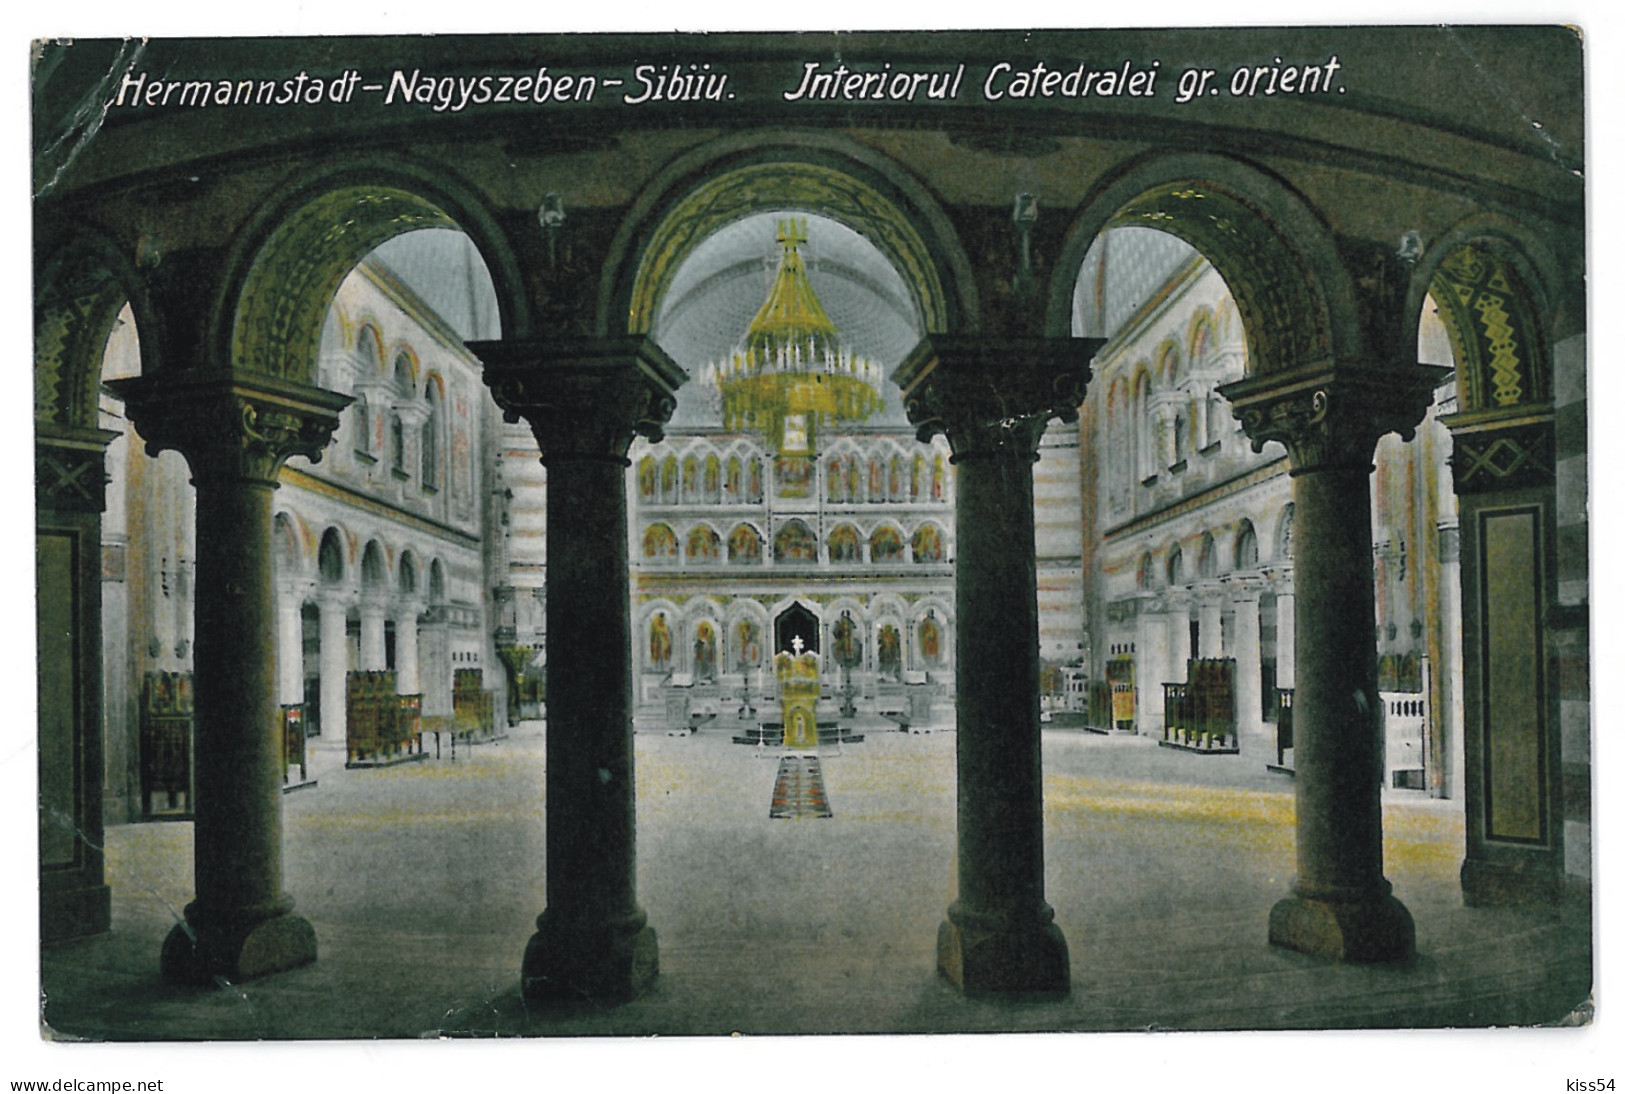 RO 45 - 11031 SIBIU, Cathedral, Romania - Old Postcard - Used - 1916 - Rumänien